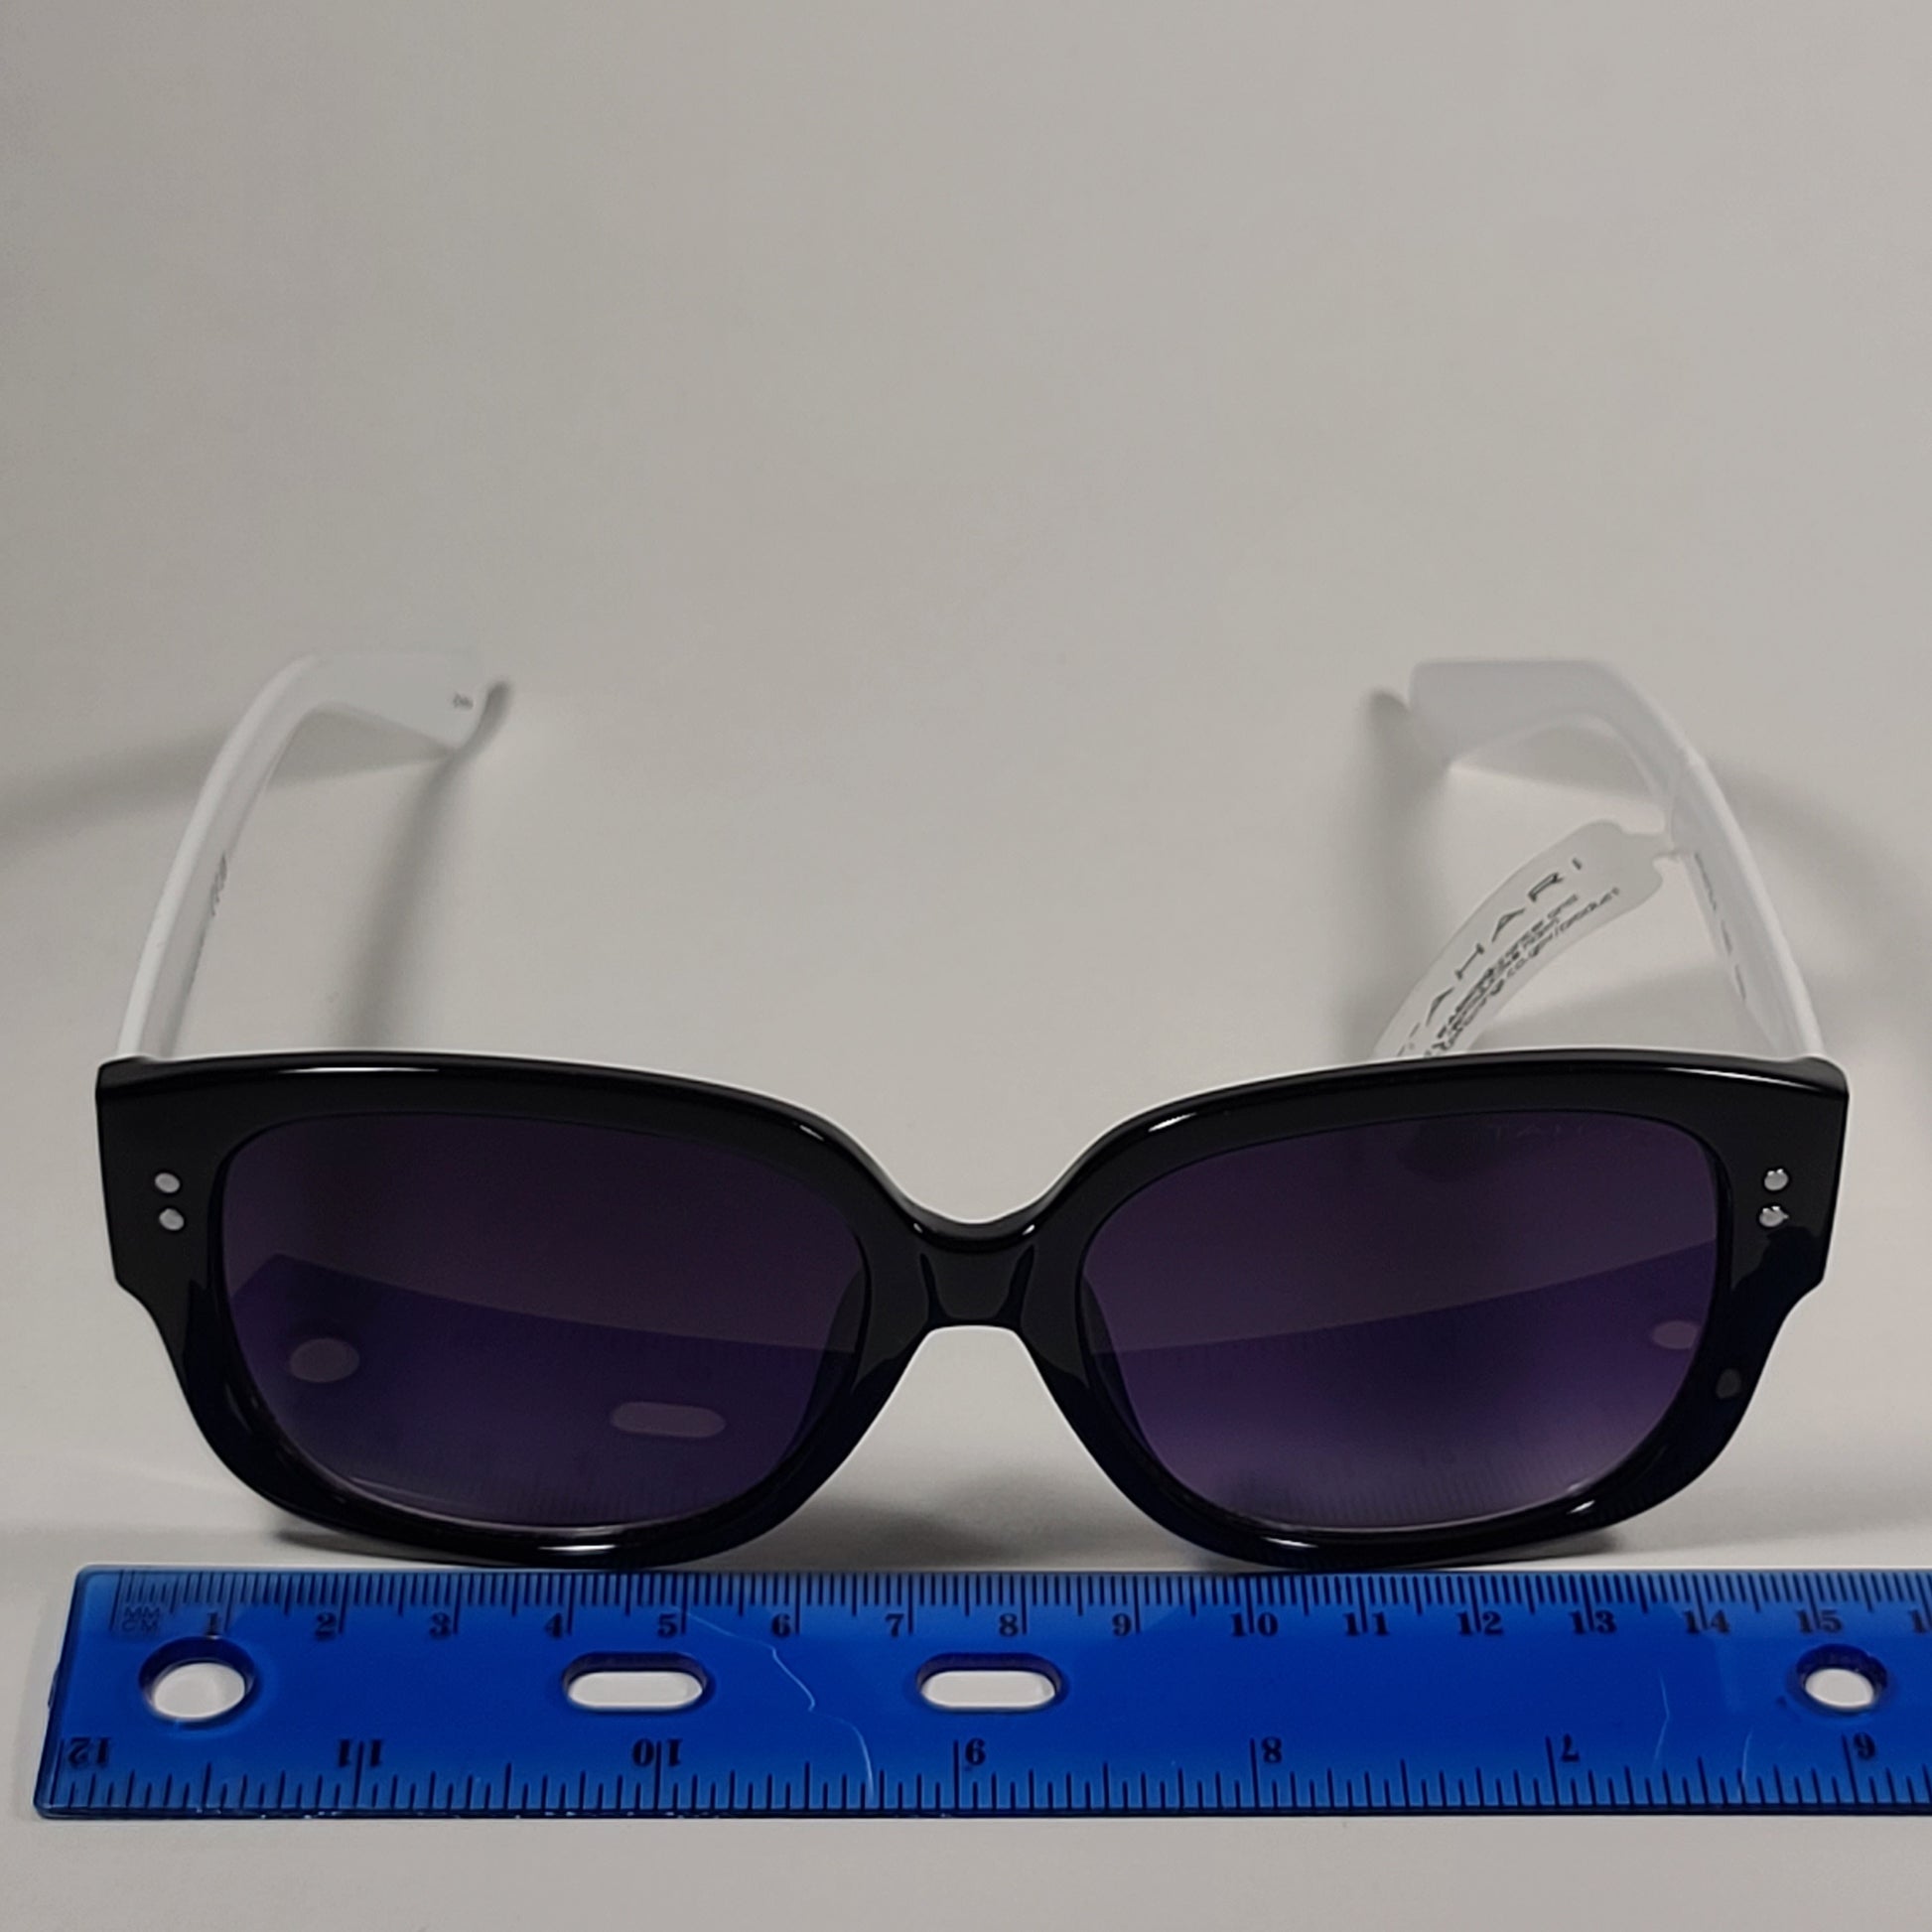 Oasis - Floating Sunglasses White / Black Gradient